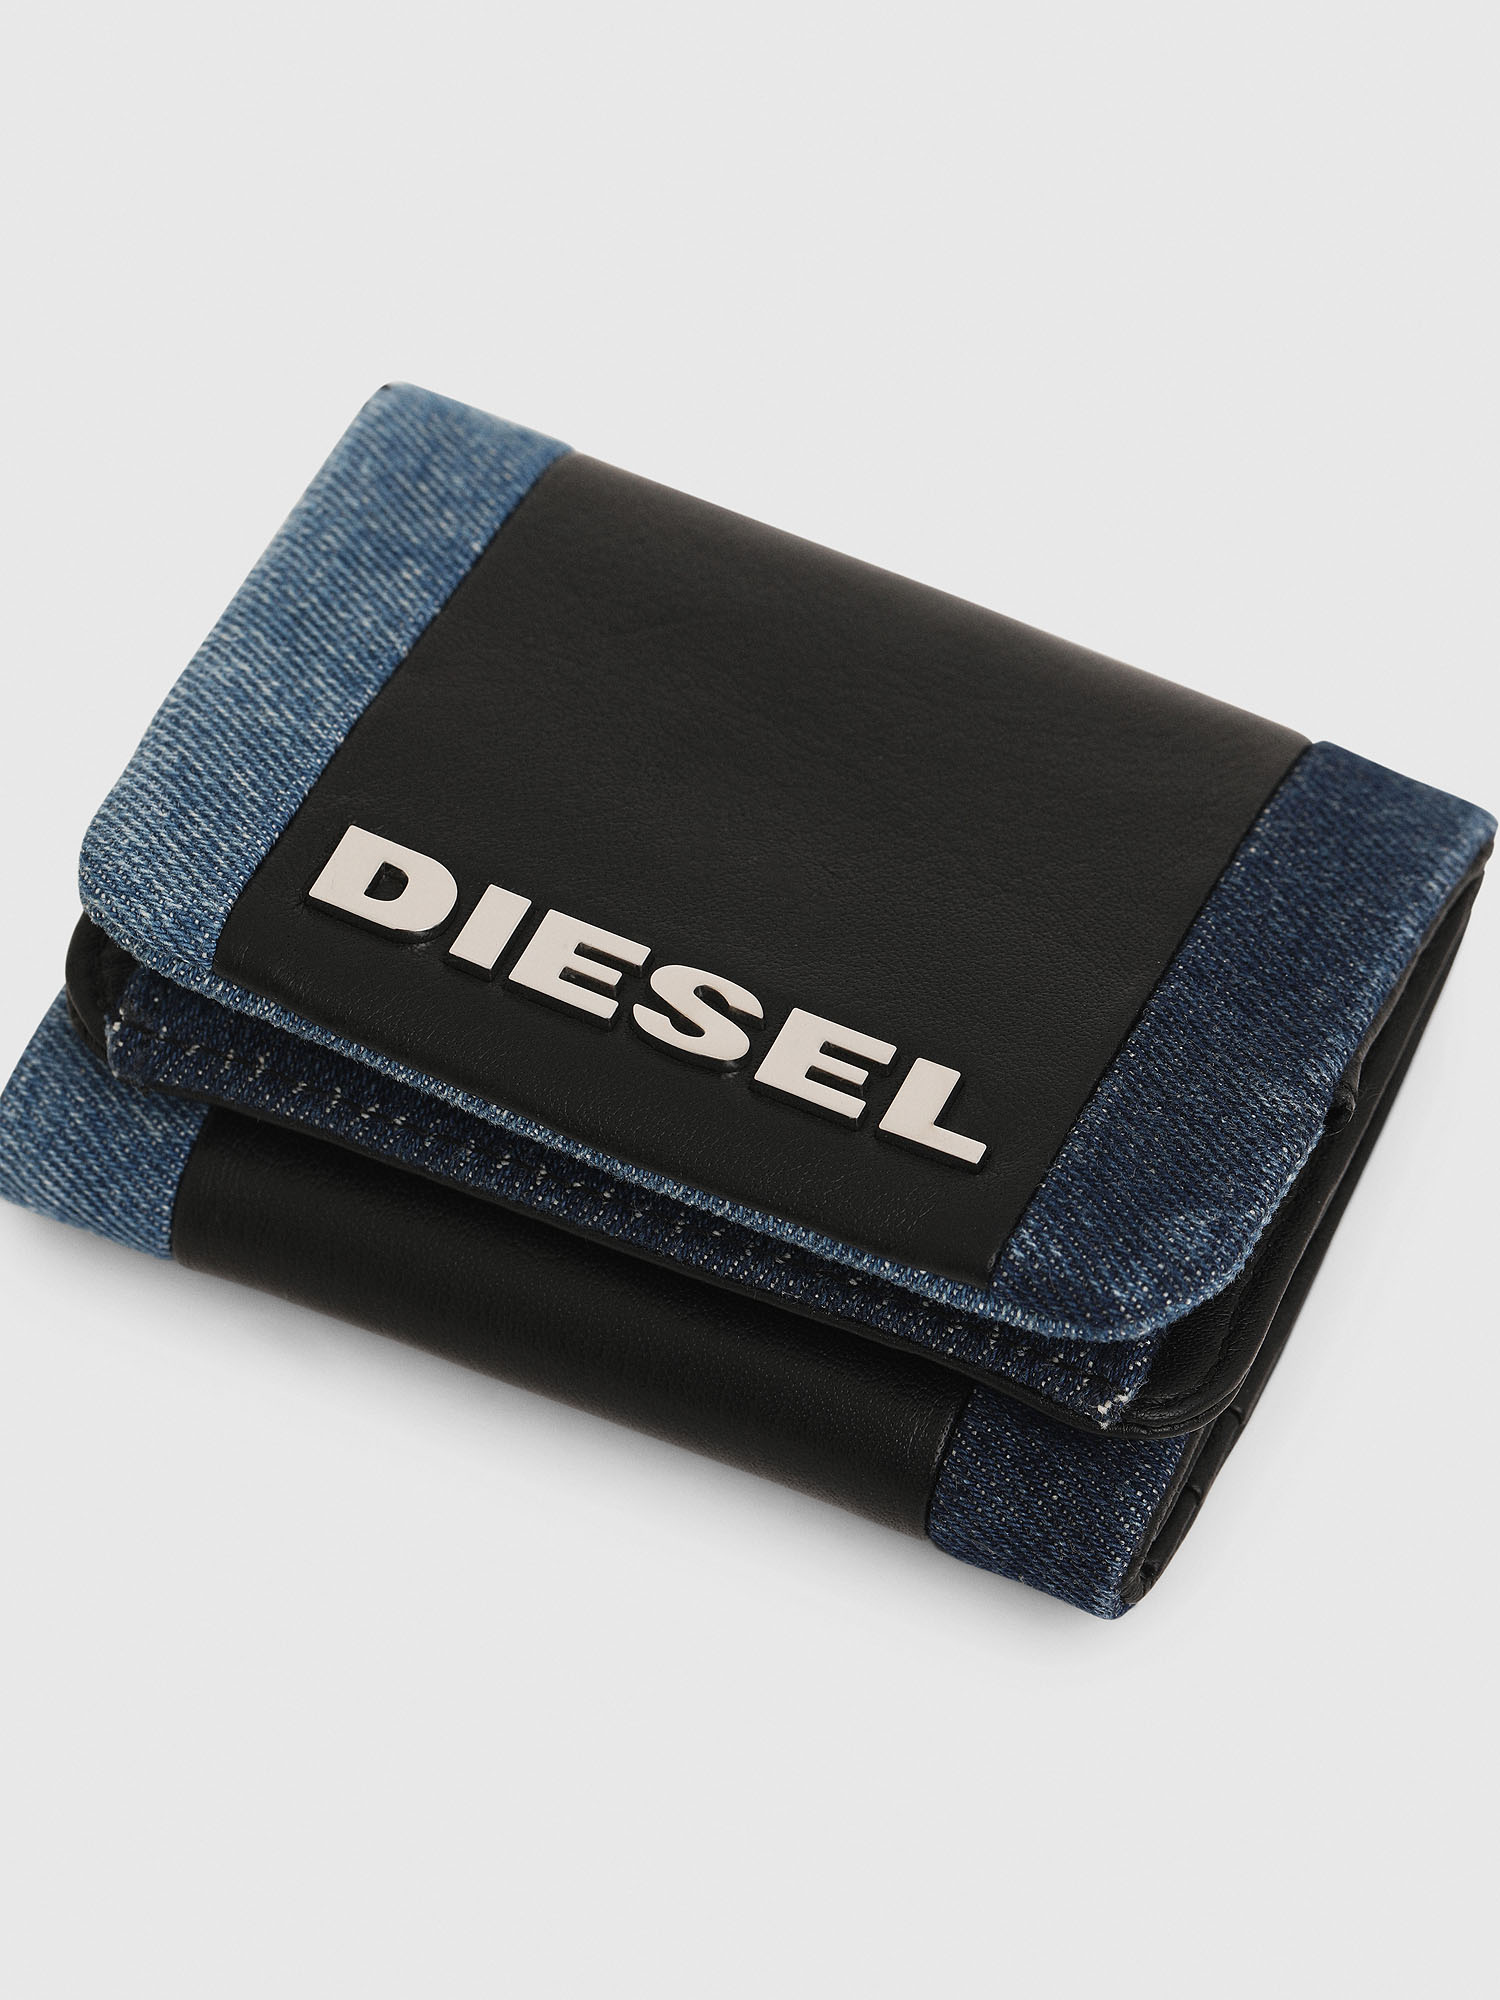 Diesel - LORETTA, Black/Blue - Image 6